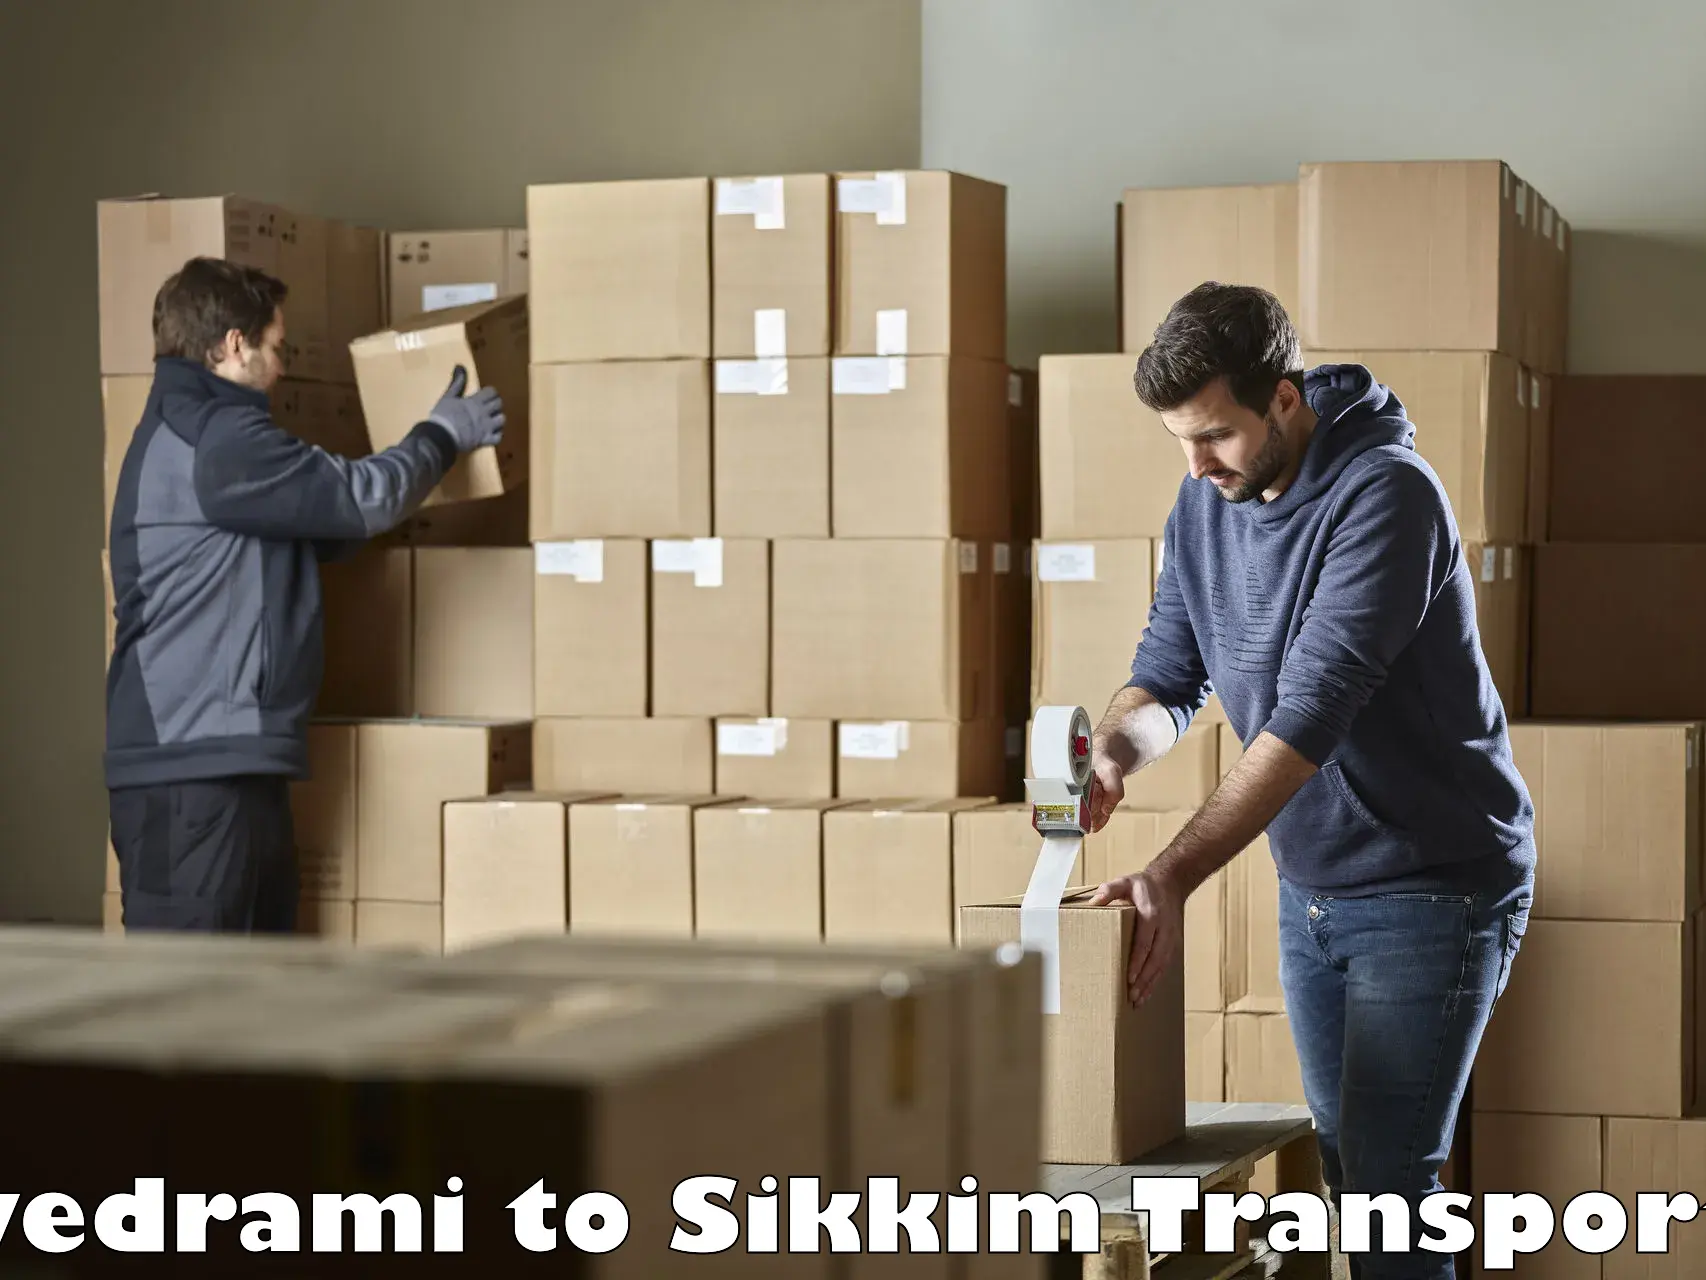 Transport in sharing yedrami to Sikkim